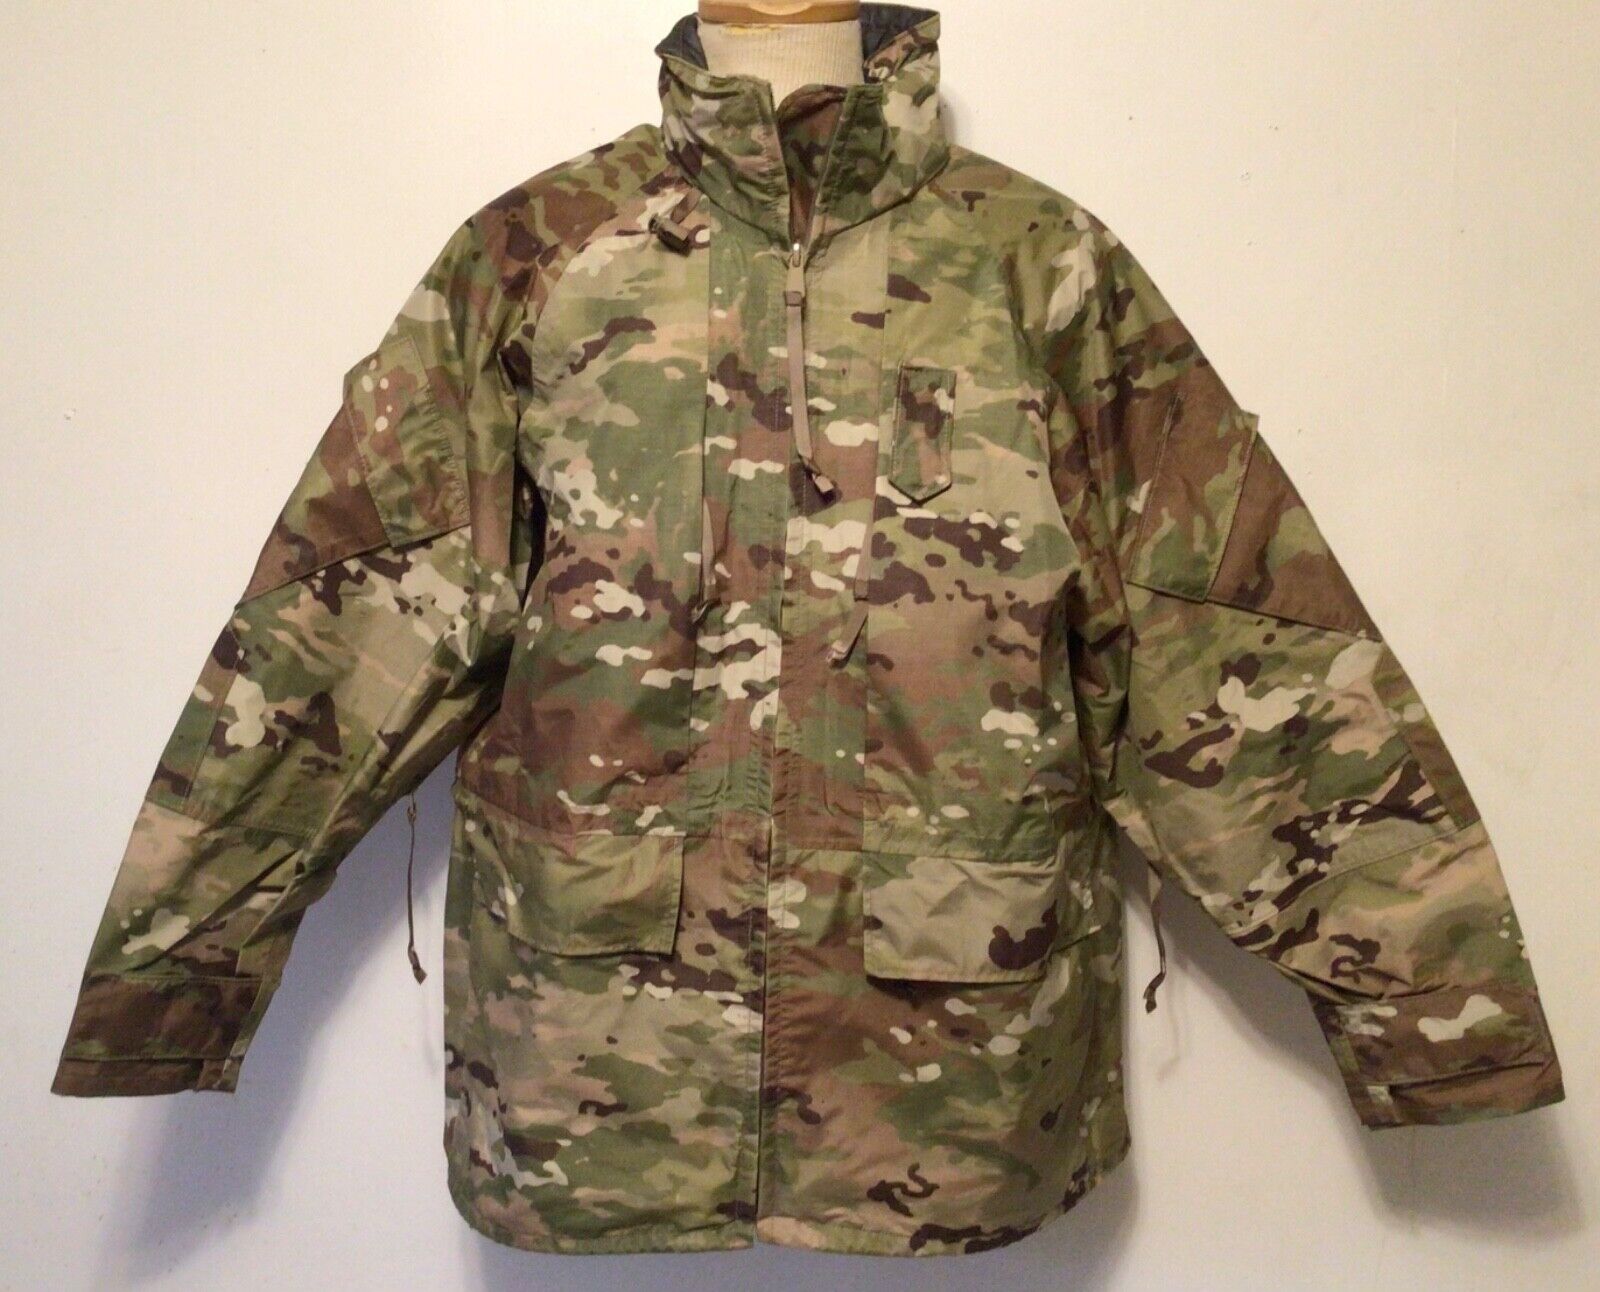 APECS Parka/Jacket All Purpose Environmental Camouflage Medium Regular